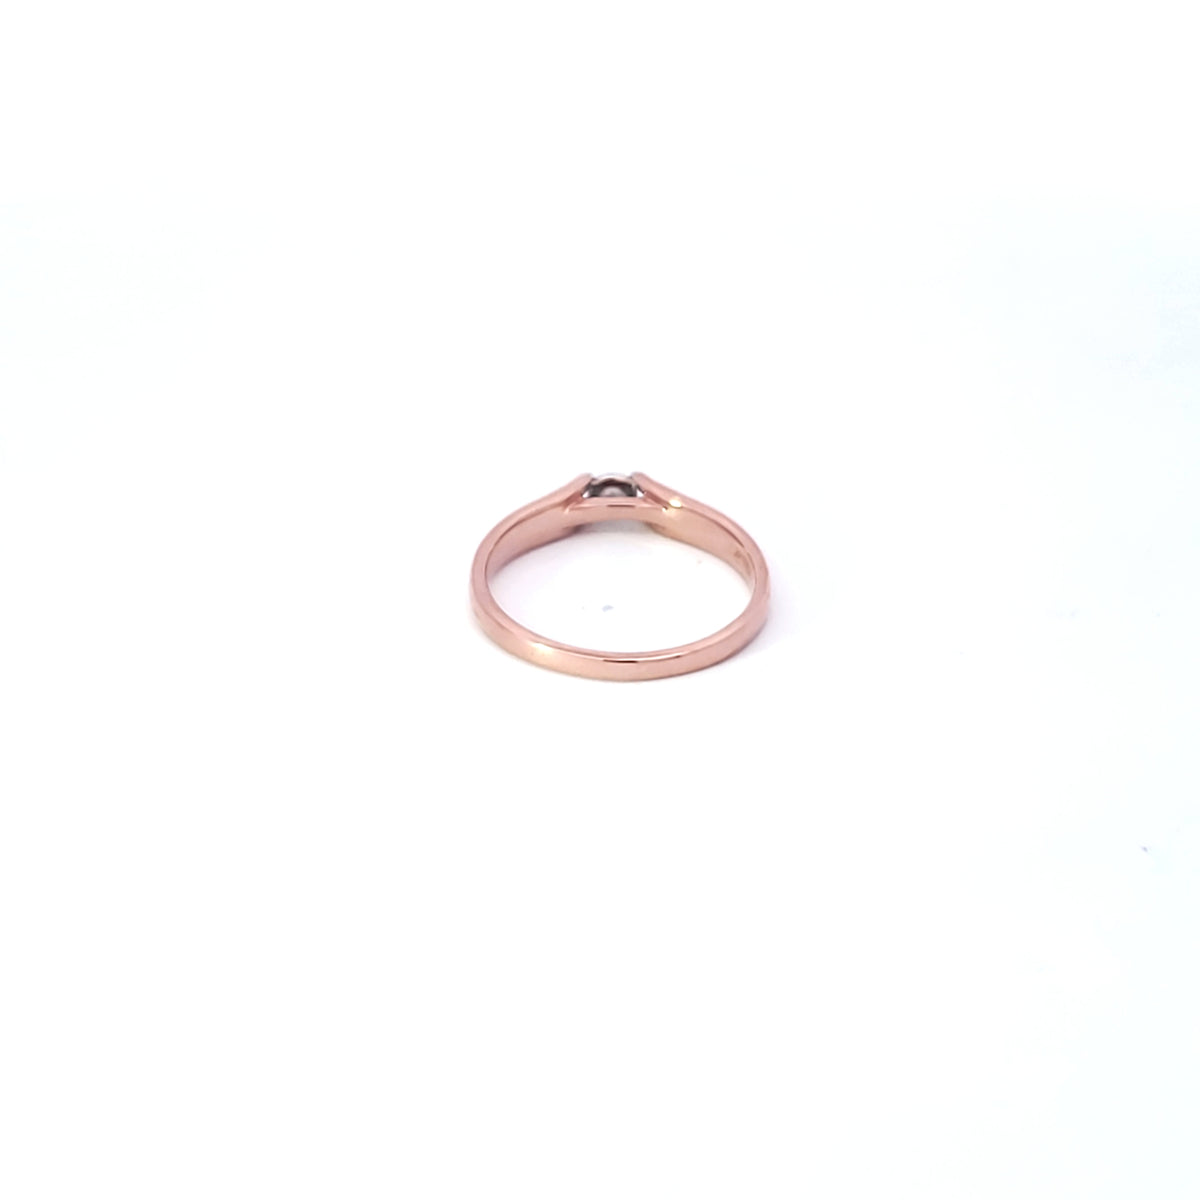 10K Rose Gold 0.10cttw Diamond Ring - Size 6.5